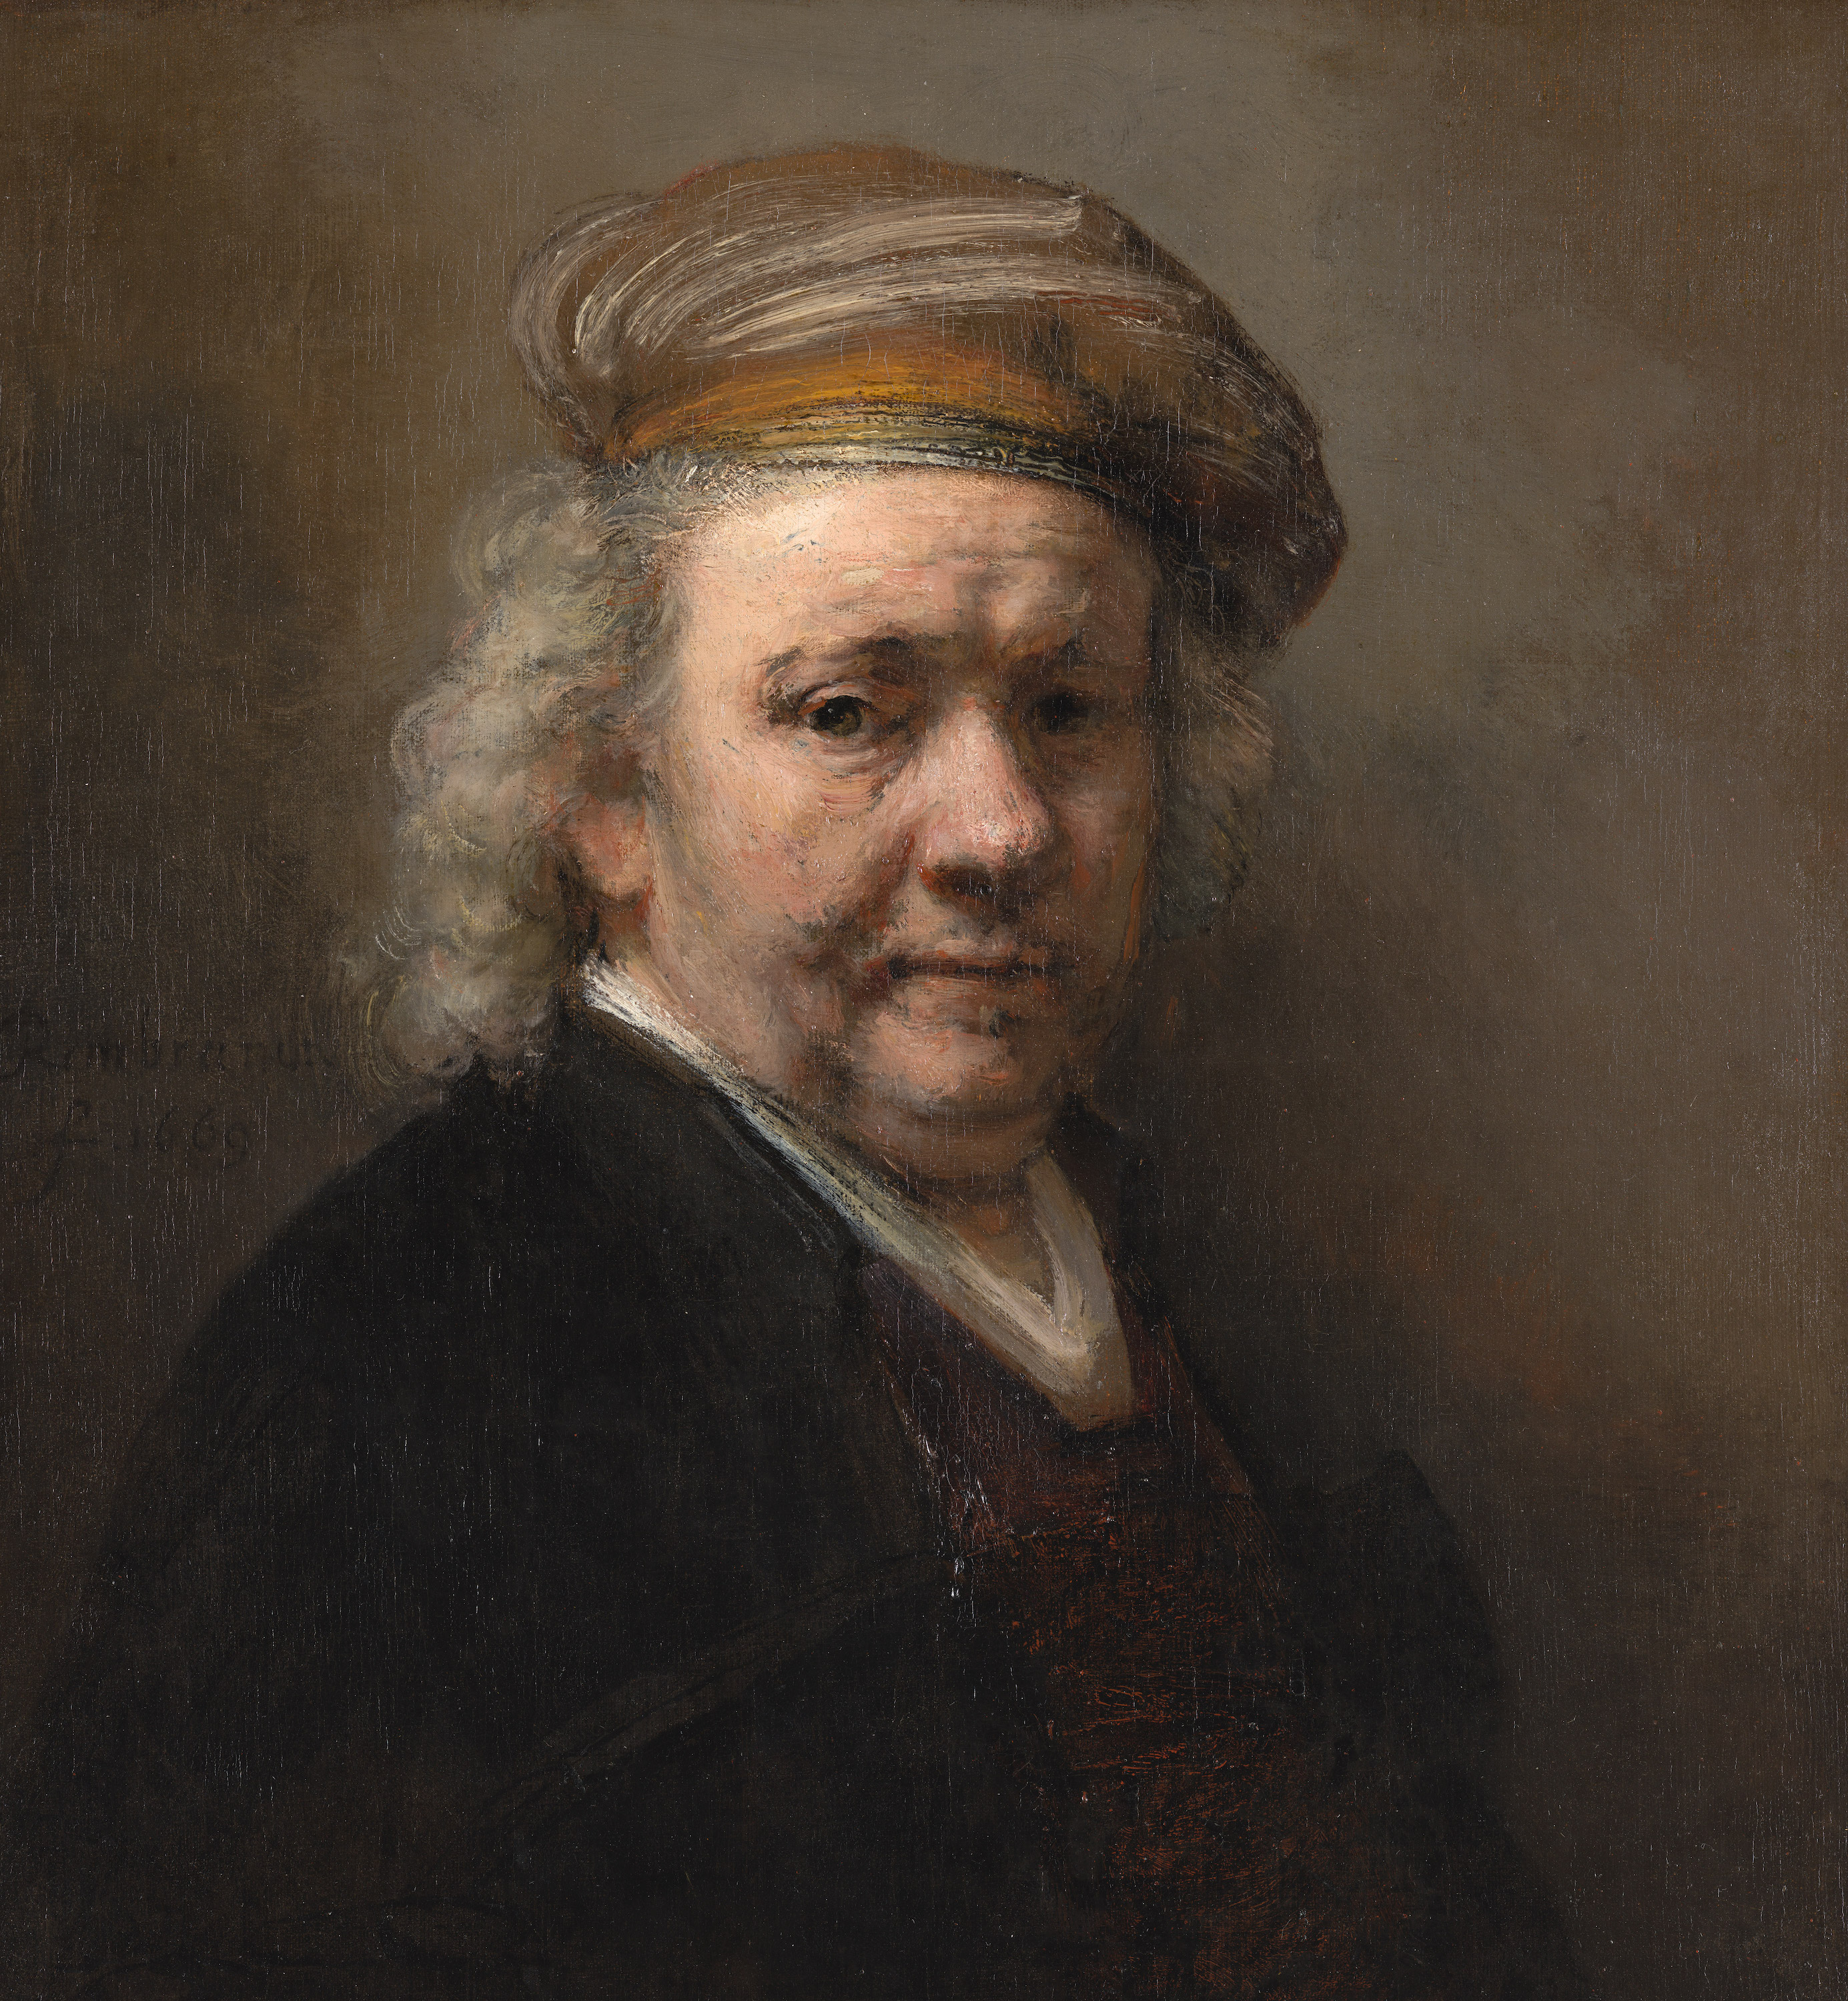 Autoportrait by Rembrandt van Rijn - 1669 - 65.4 x 60.2 cm Mauritshuis, La Haye